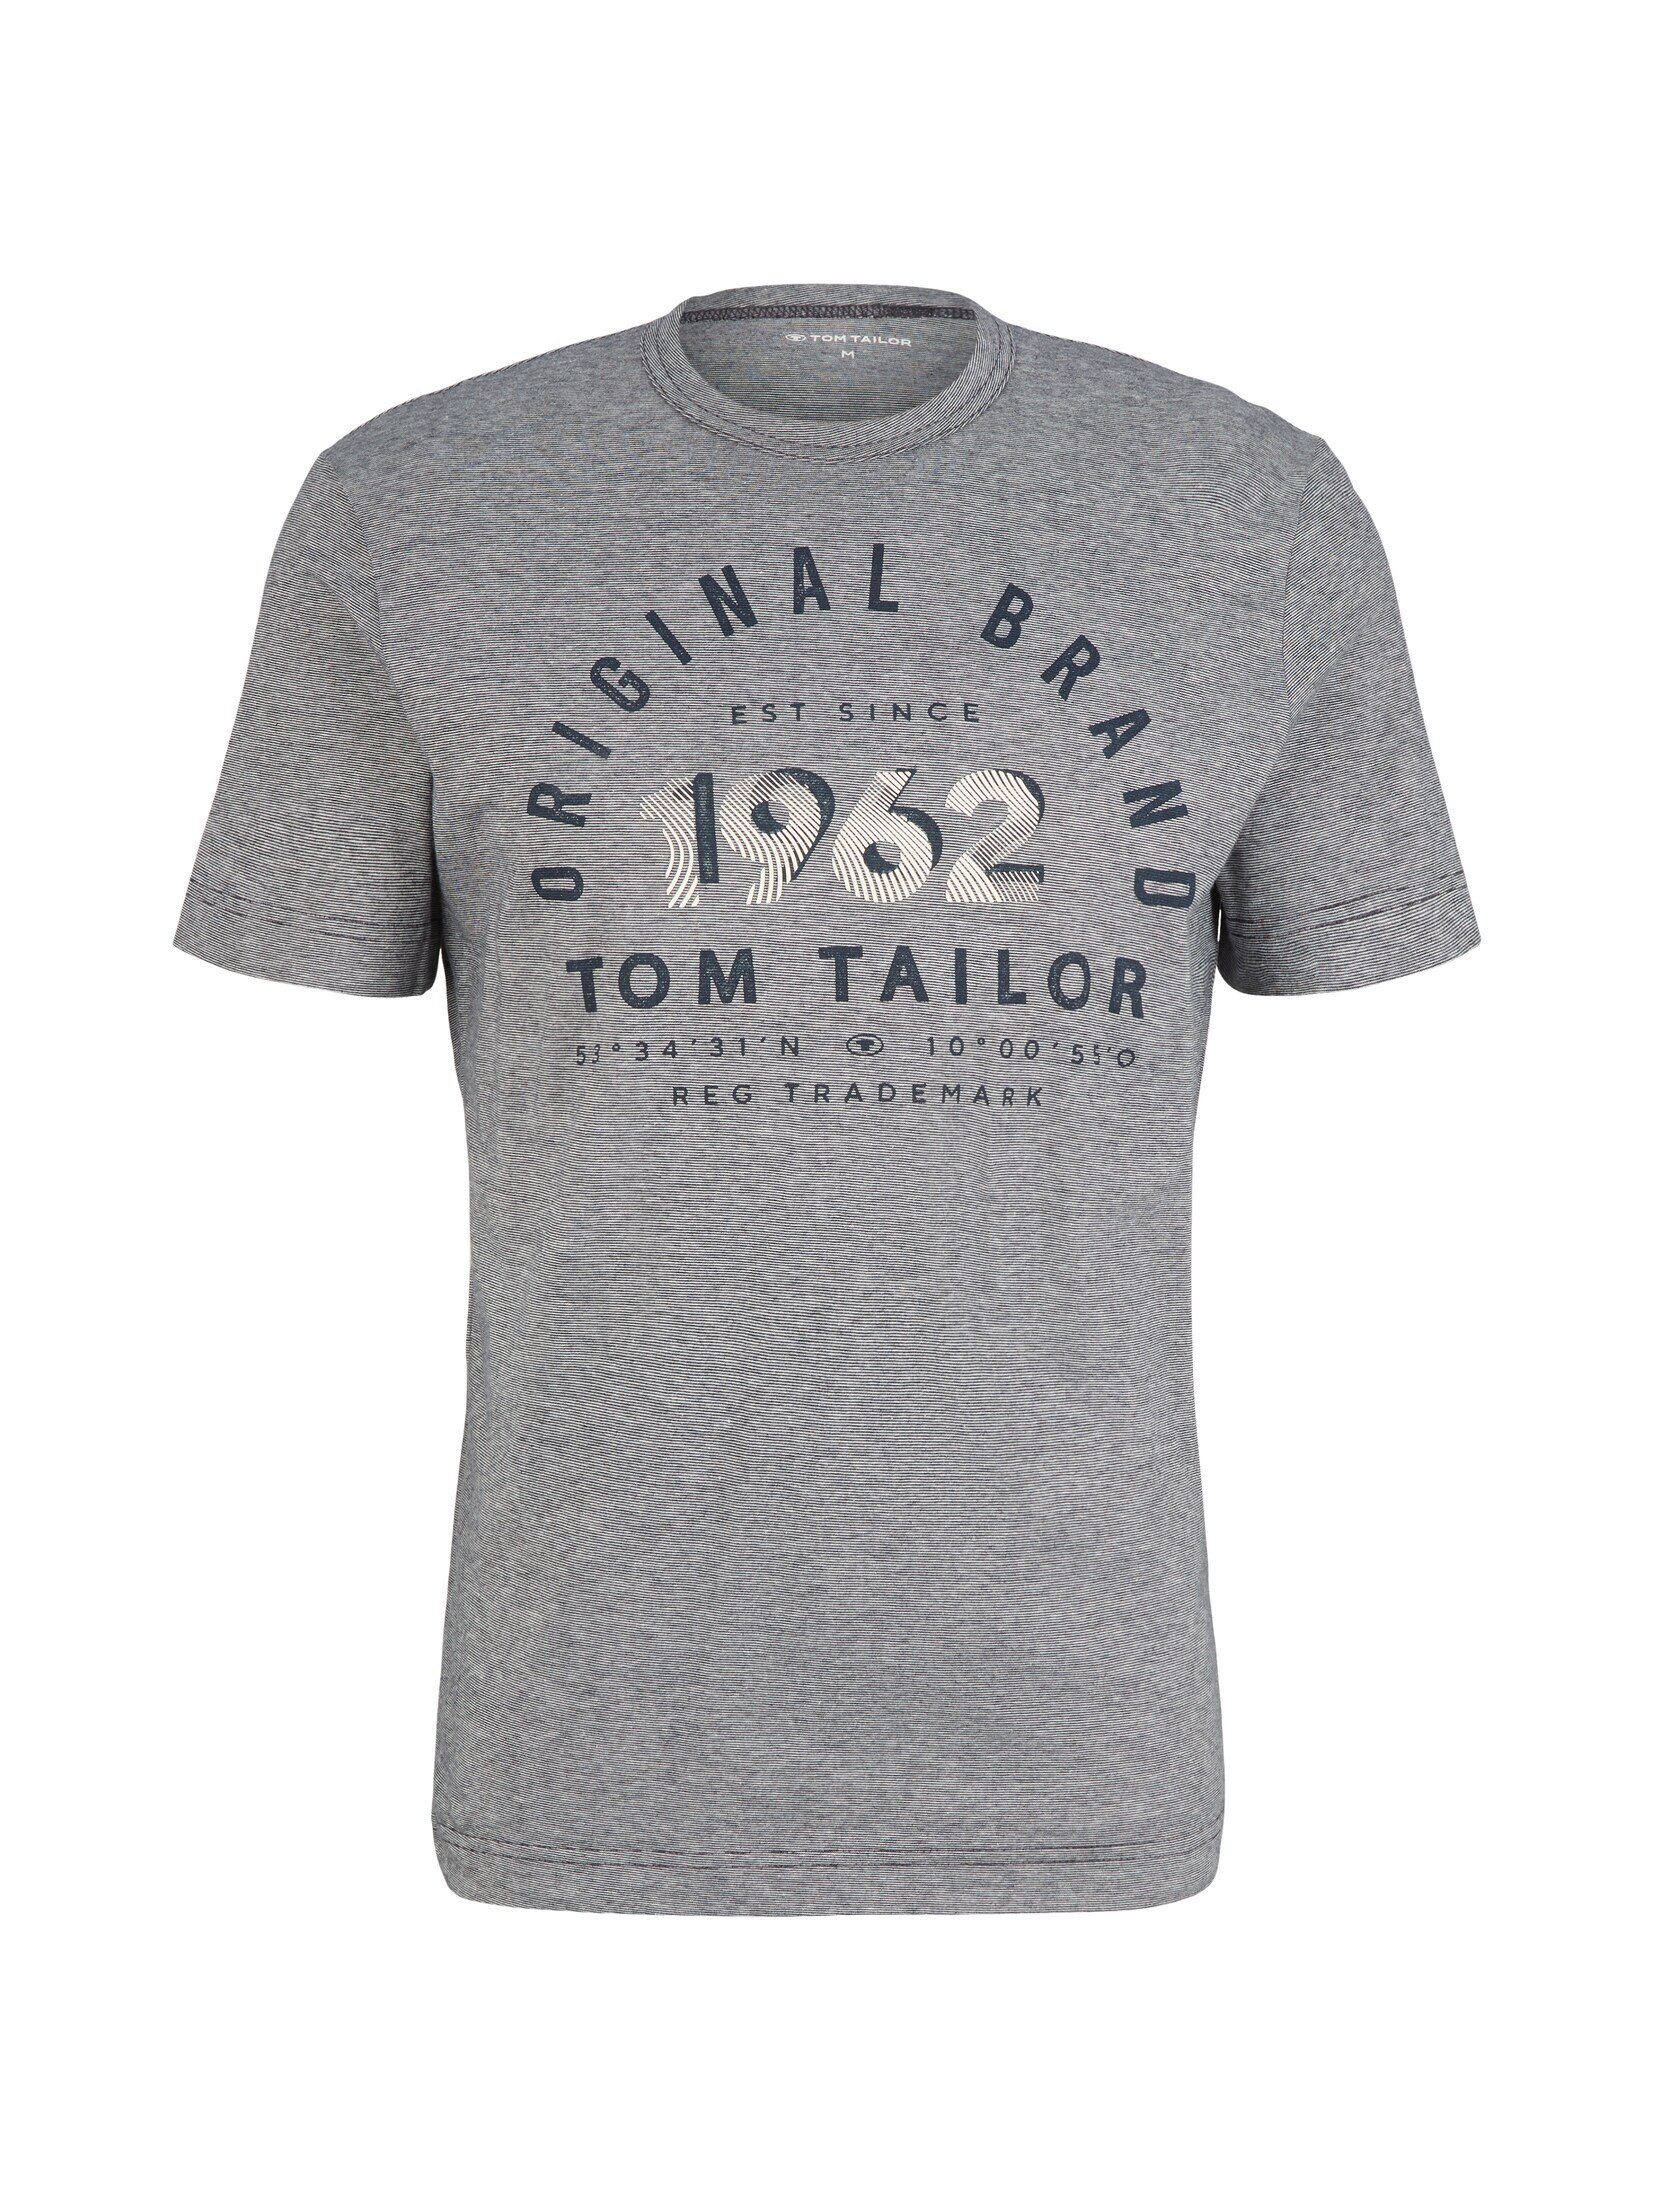 Print T-Shirt TAILOR offwhite stripe T-Shirt navy thin mit TOM